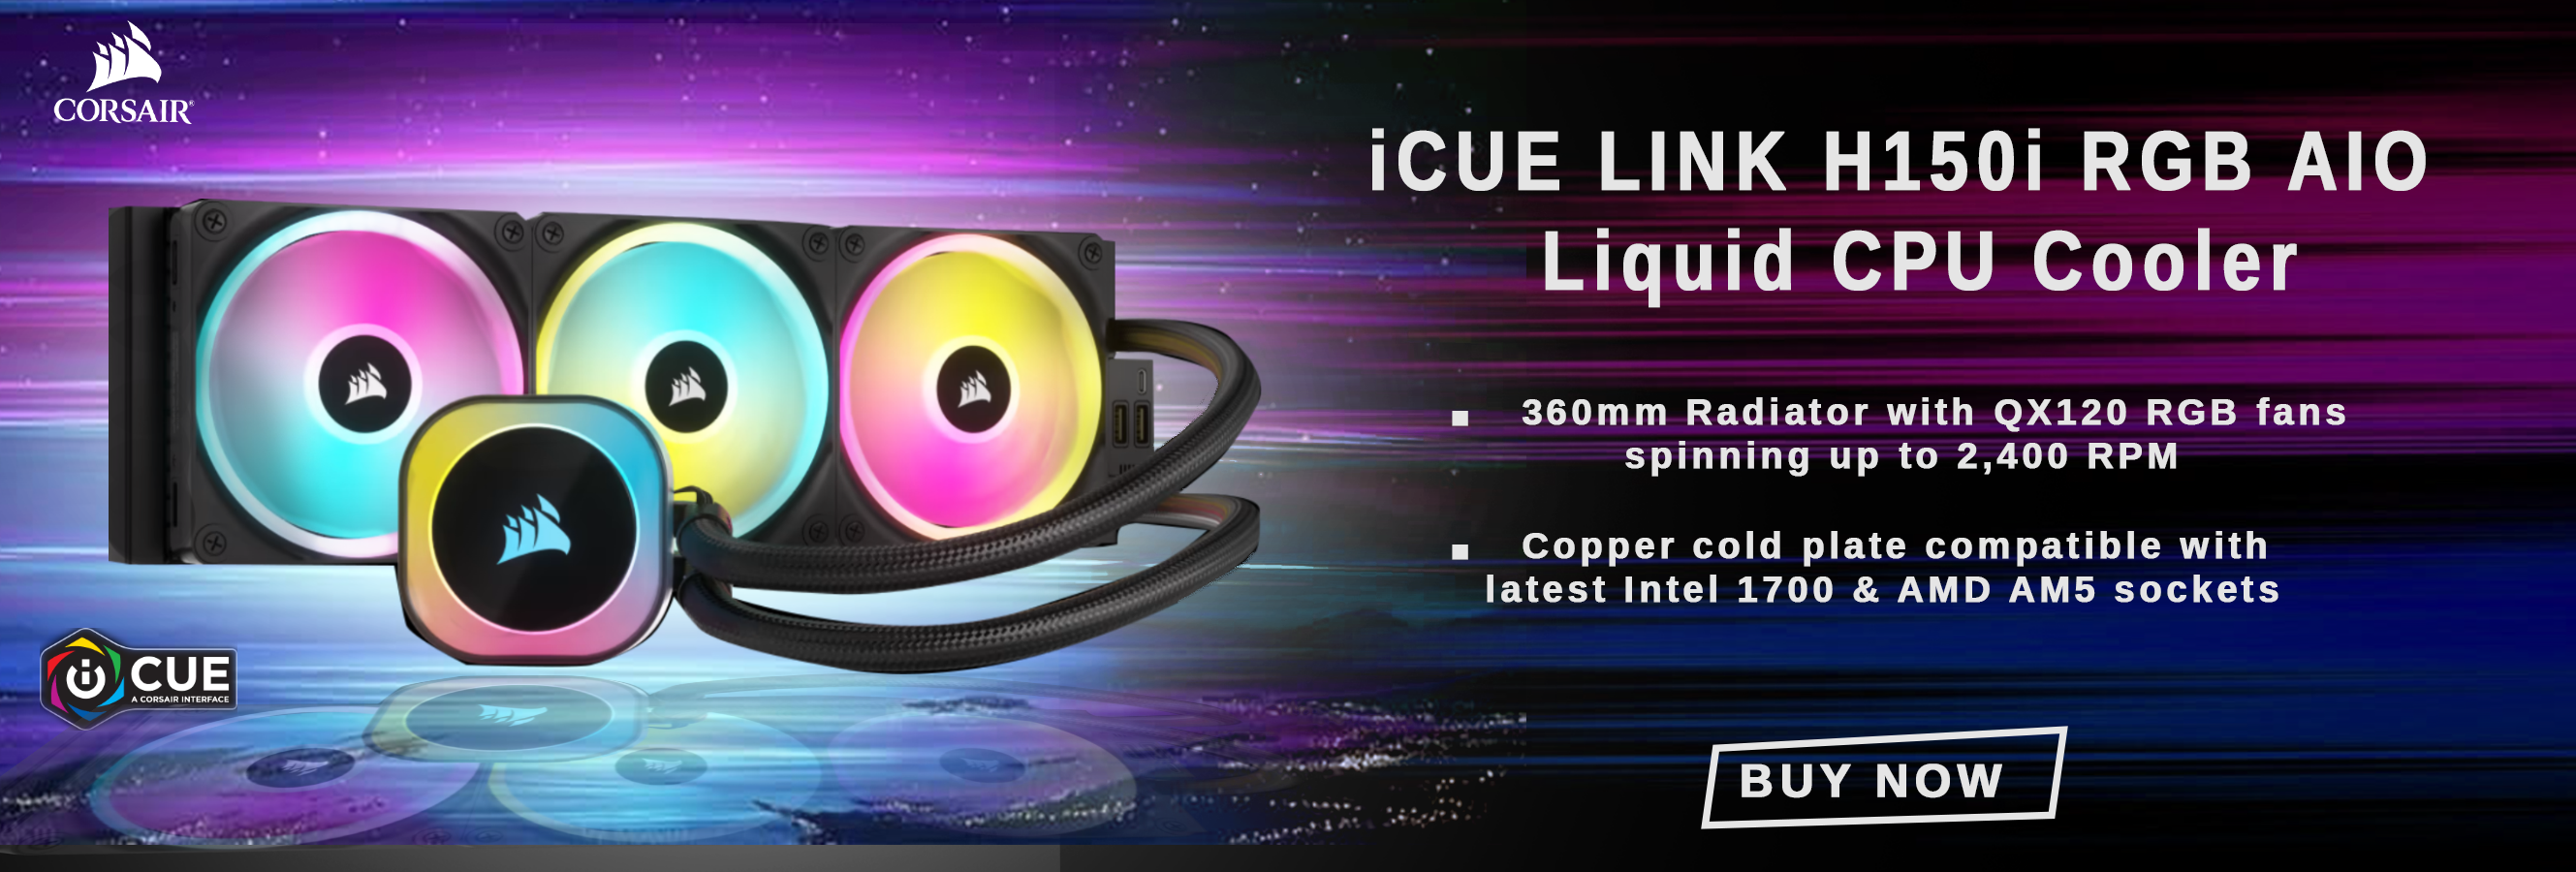 Corsair iCUE LINK H150i RGB AIO Liquid CPU Cooler (CW-9061003-WW)